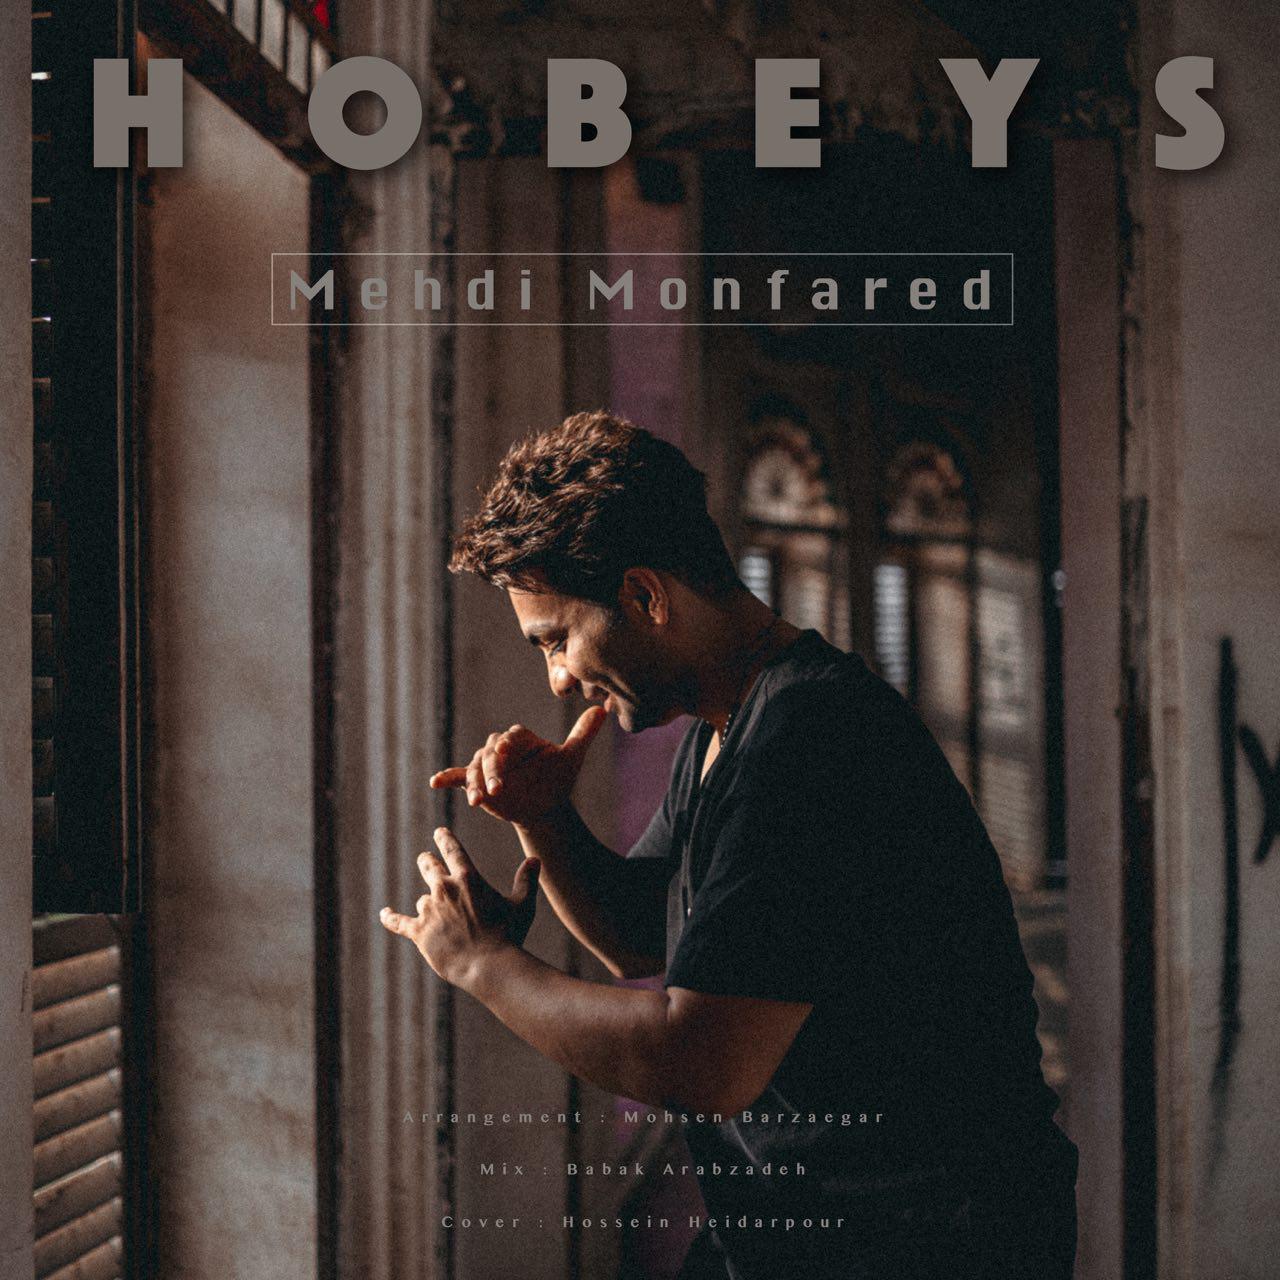 Mehdi Monfared – Hobeys